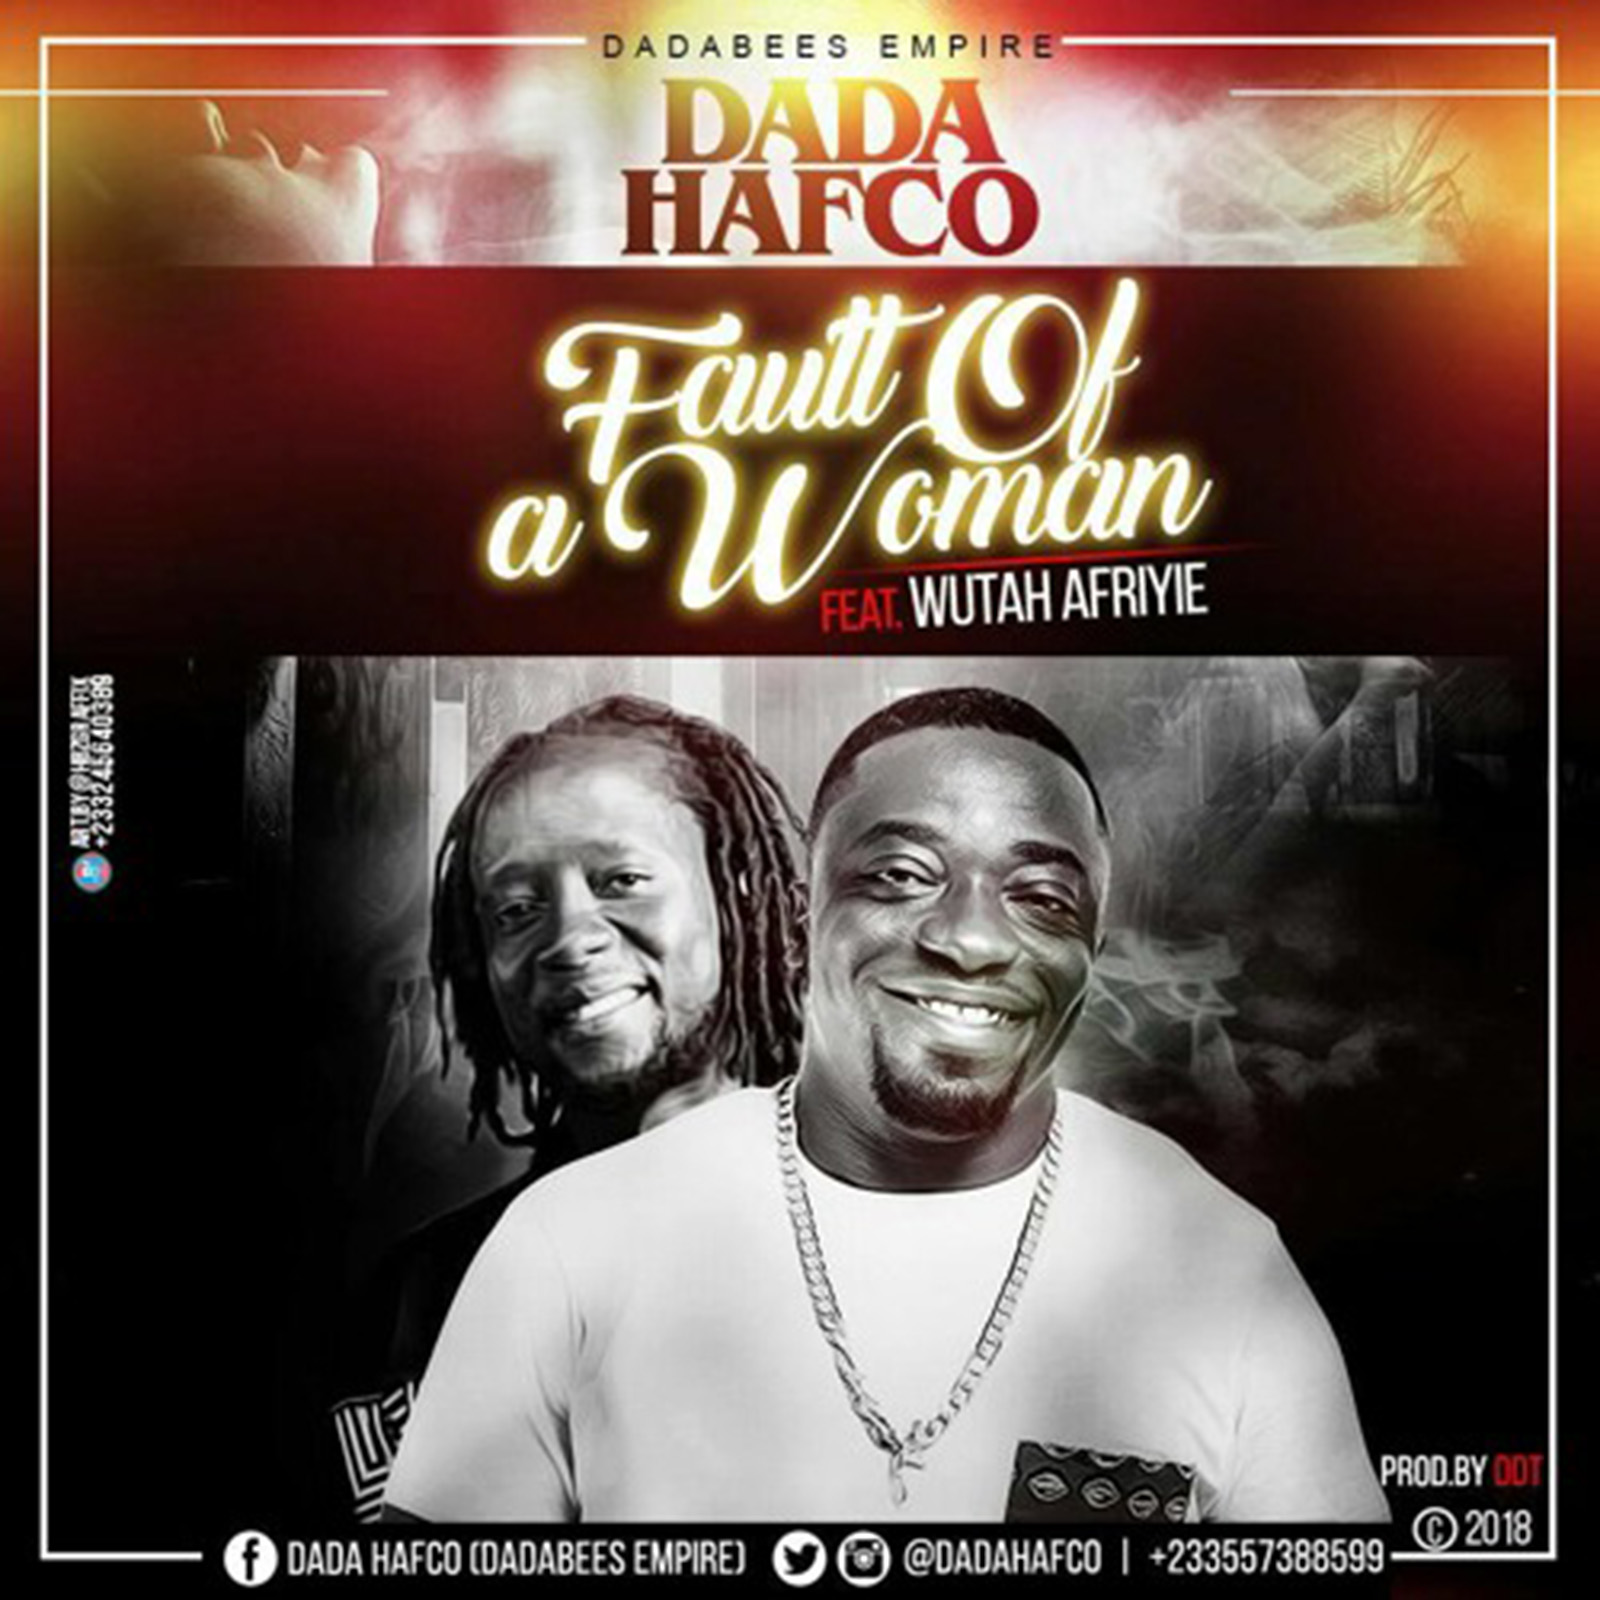 Fault Of A Woman by Dada Hafco feat. Wutah Afriyie